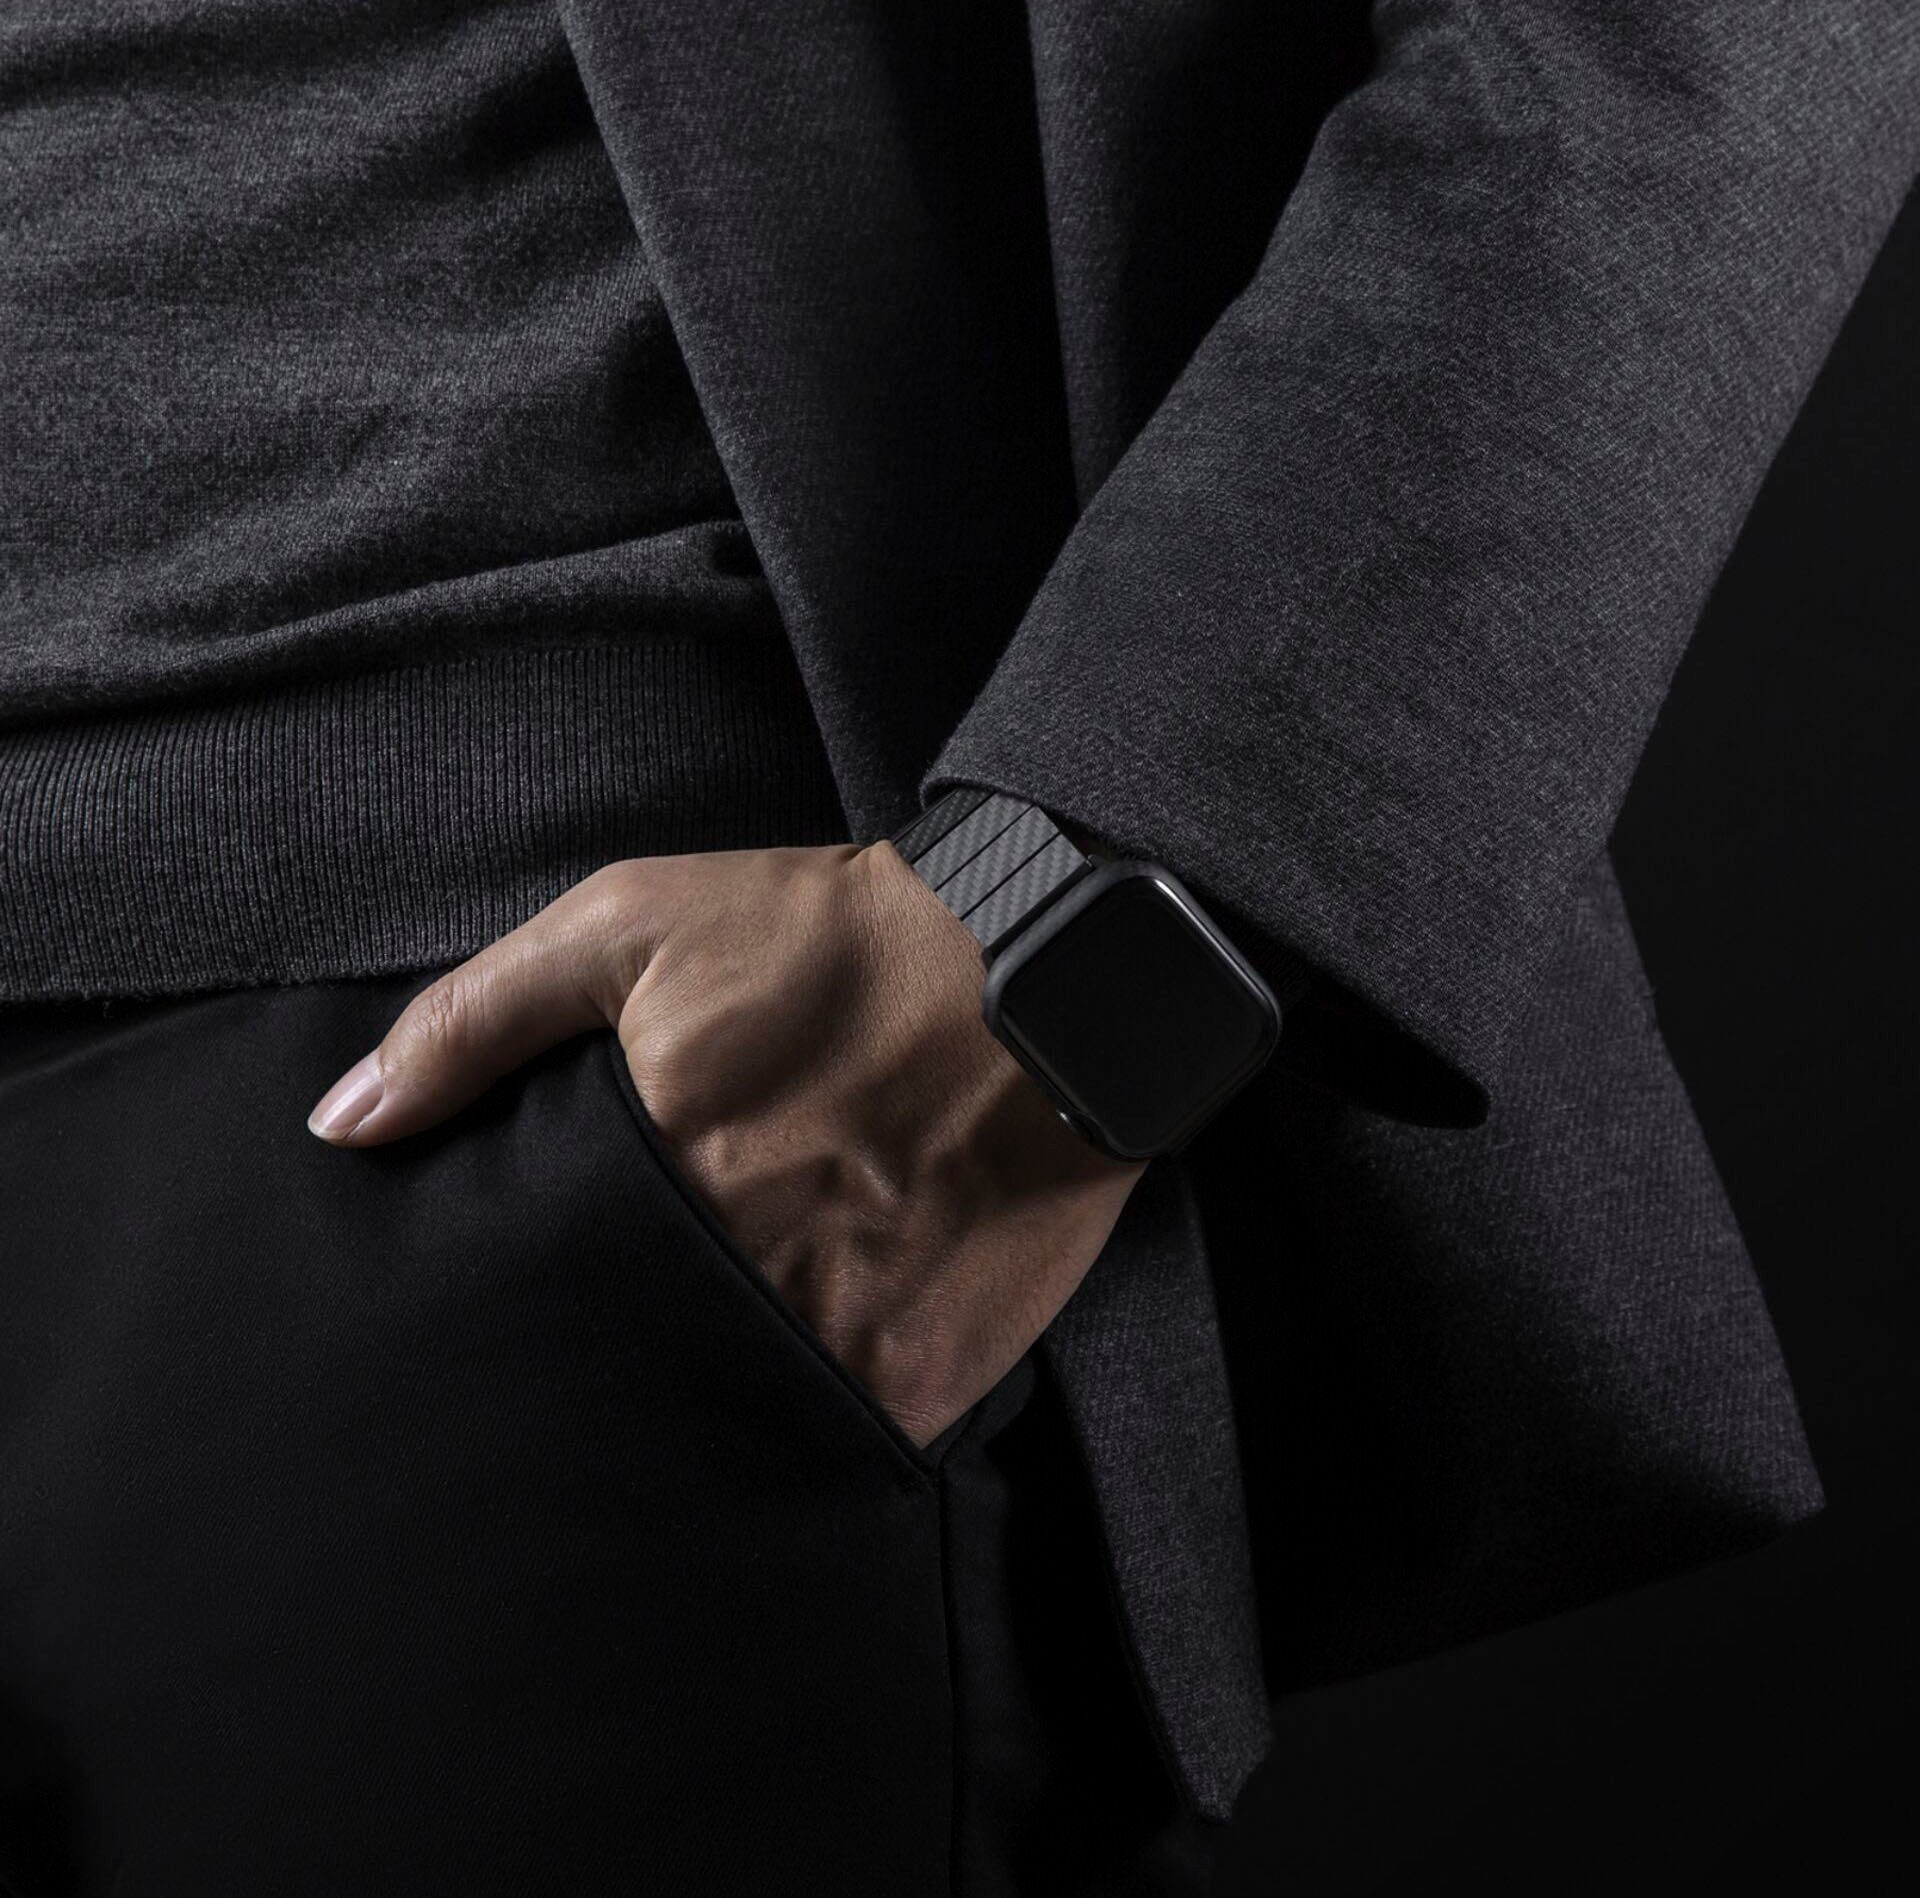 42-44mm Smartwatch-Armband Modern Pitaka Carbon Fiber Bracelet Link Band